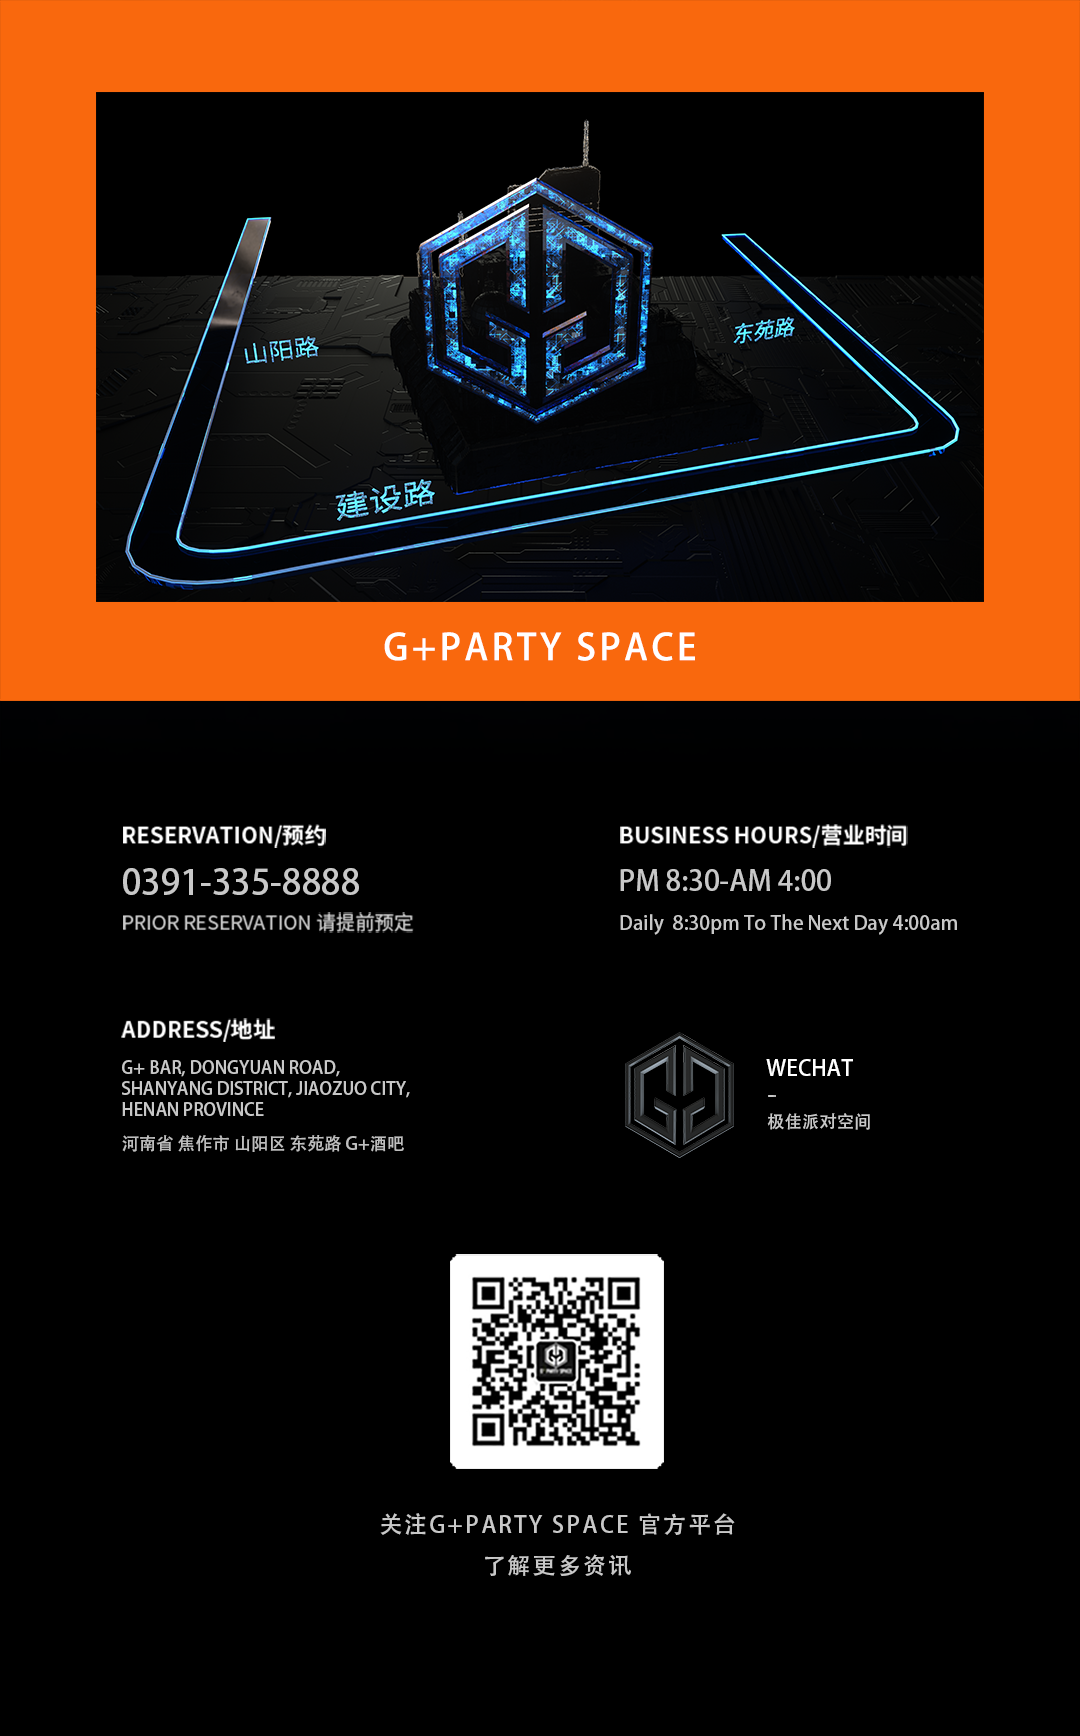 G+PARTY SPACE｜9月12日｜气氛轰炸机今晚上线-焦作G+酒吧/极佳派对空间